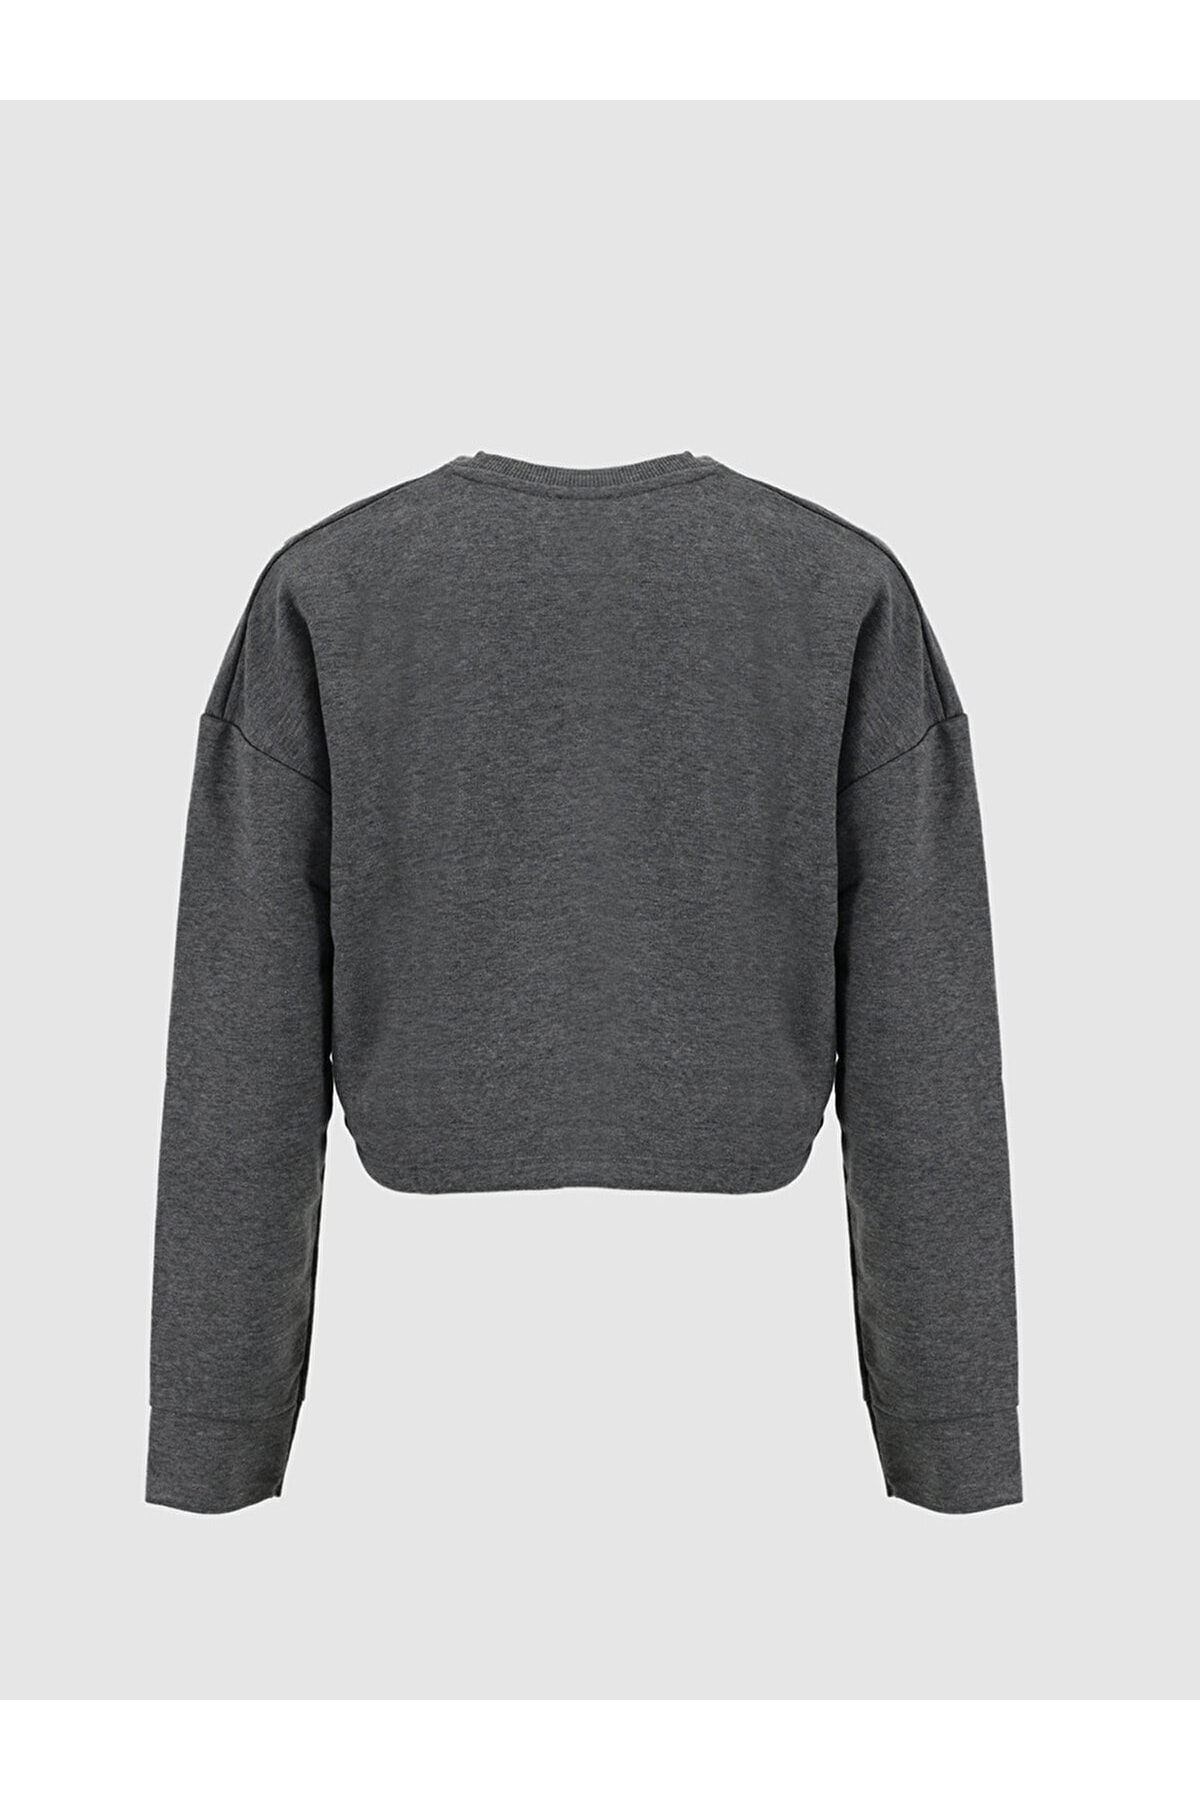 Ltb Sweatshirt Grau Regular Fit Fast ausverkauft